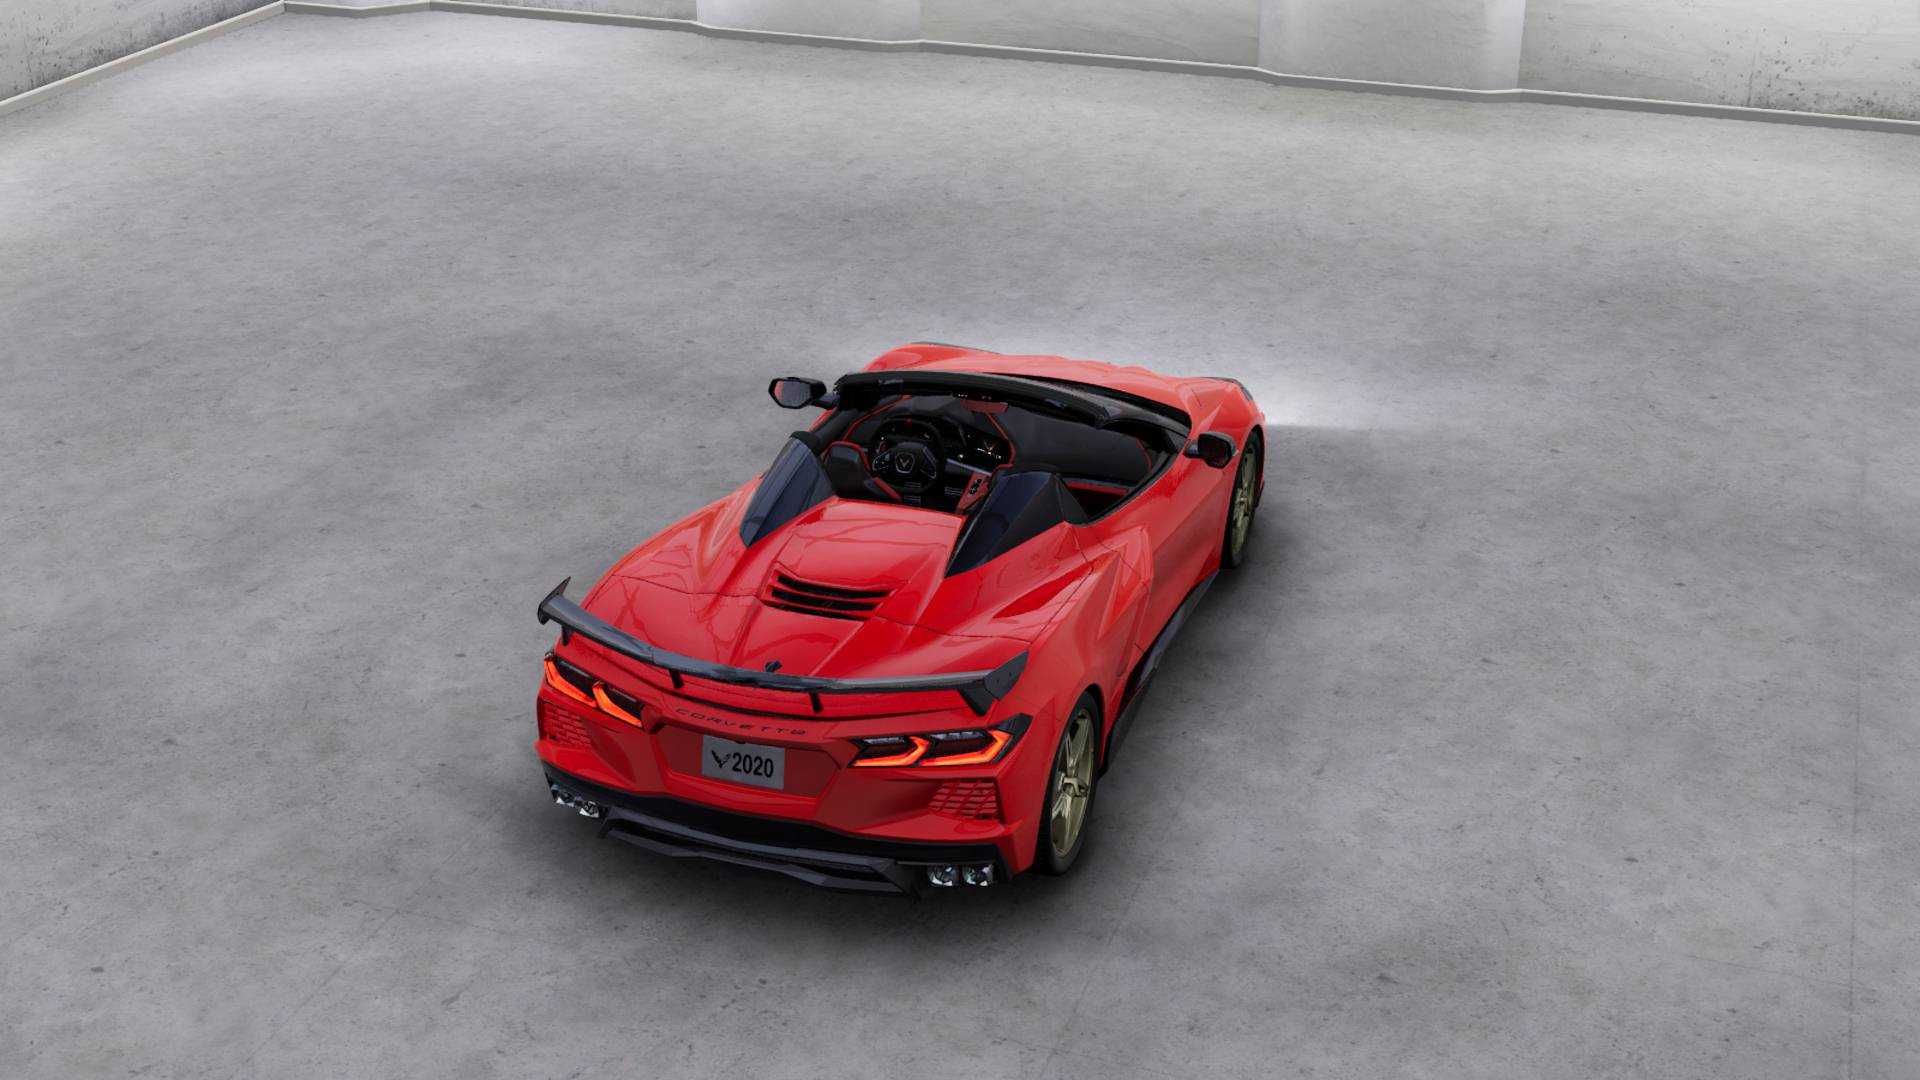 2020 Chevrolet Corvette Convertible / شورولت کوروت کانورتیبل 